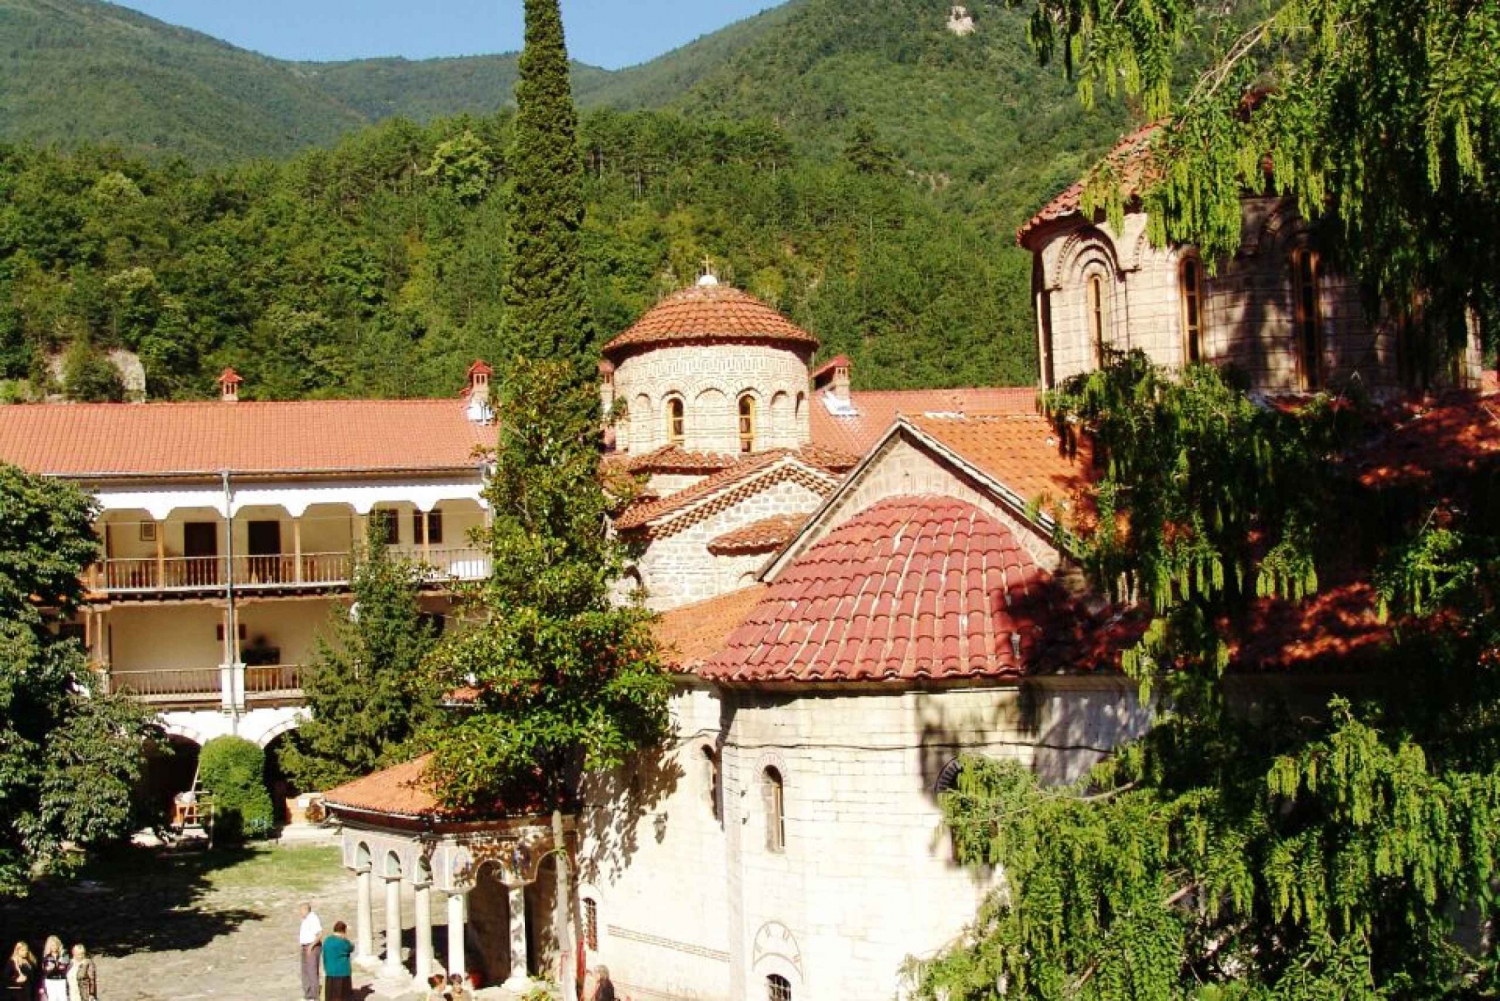 Plovdiv: Bachkovo Monastery, Fortress Asen, & Wonder Bridges